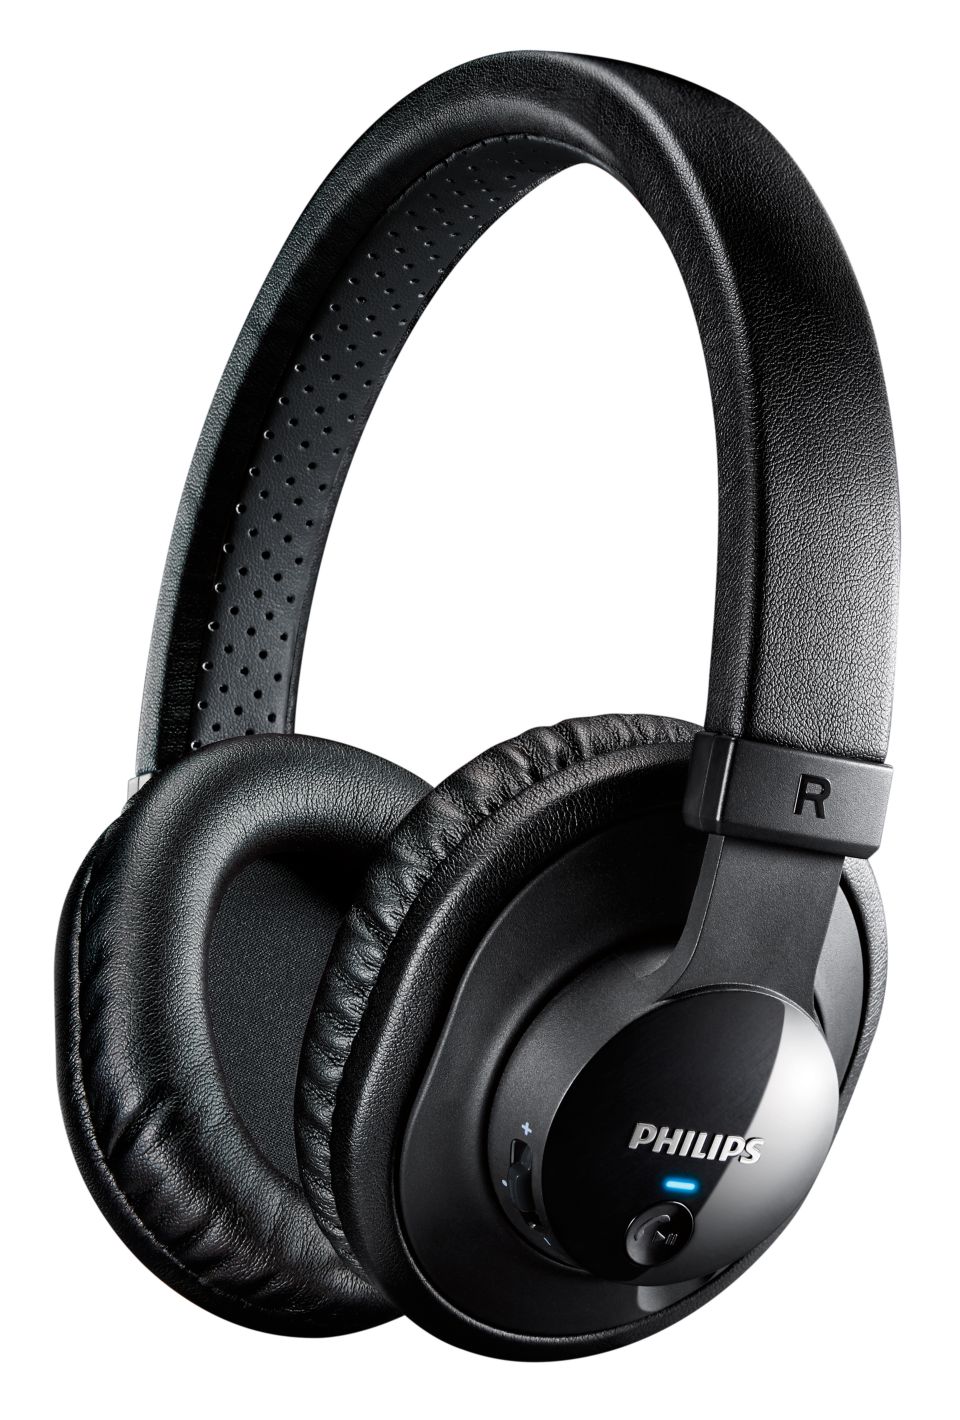 Compra oferta de Philips SHB5250BK auricular boton /00 bluetooth Auriculares